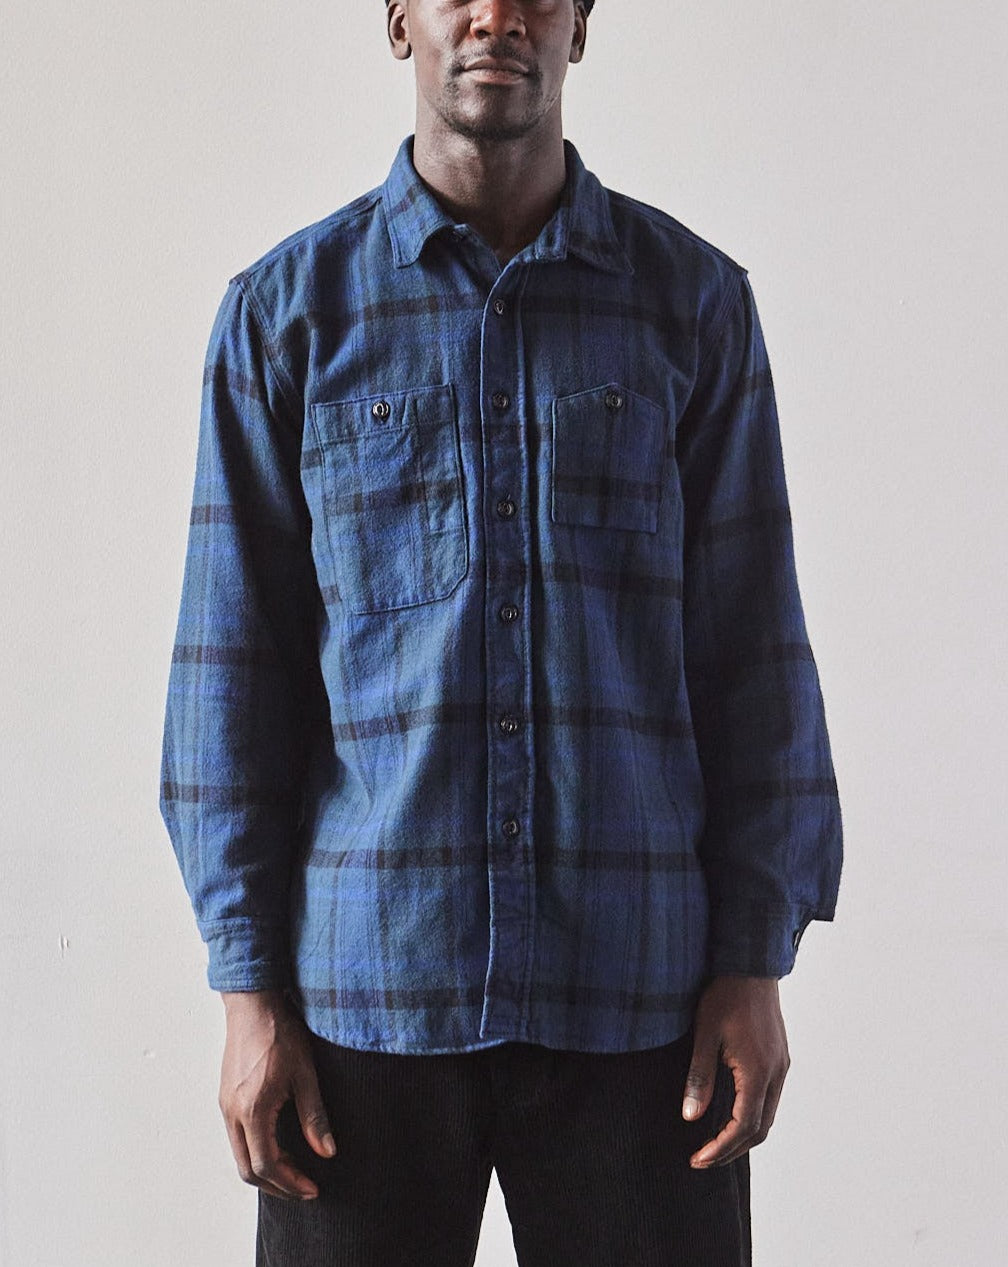 Engineered Garments Cotton Flannel Work Shirt, Navy/Black Plaid | Glasswing